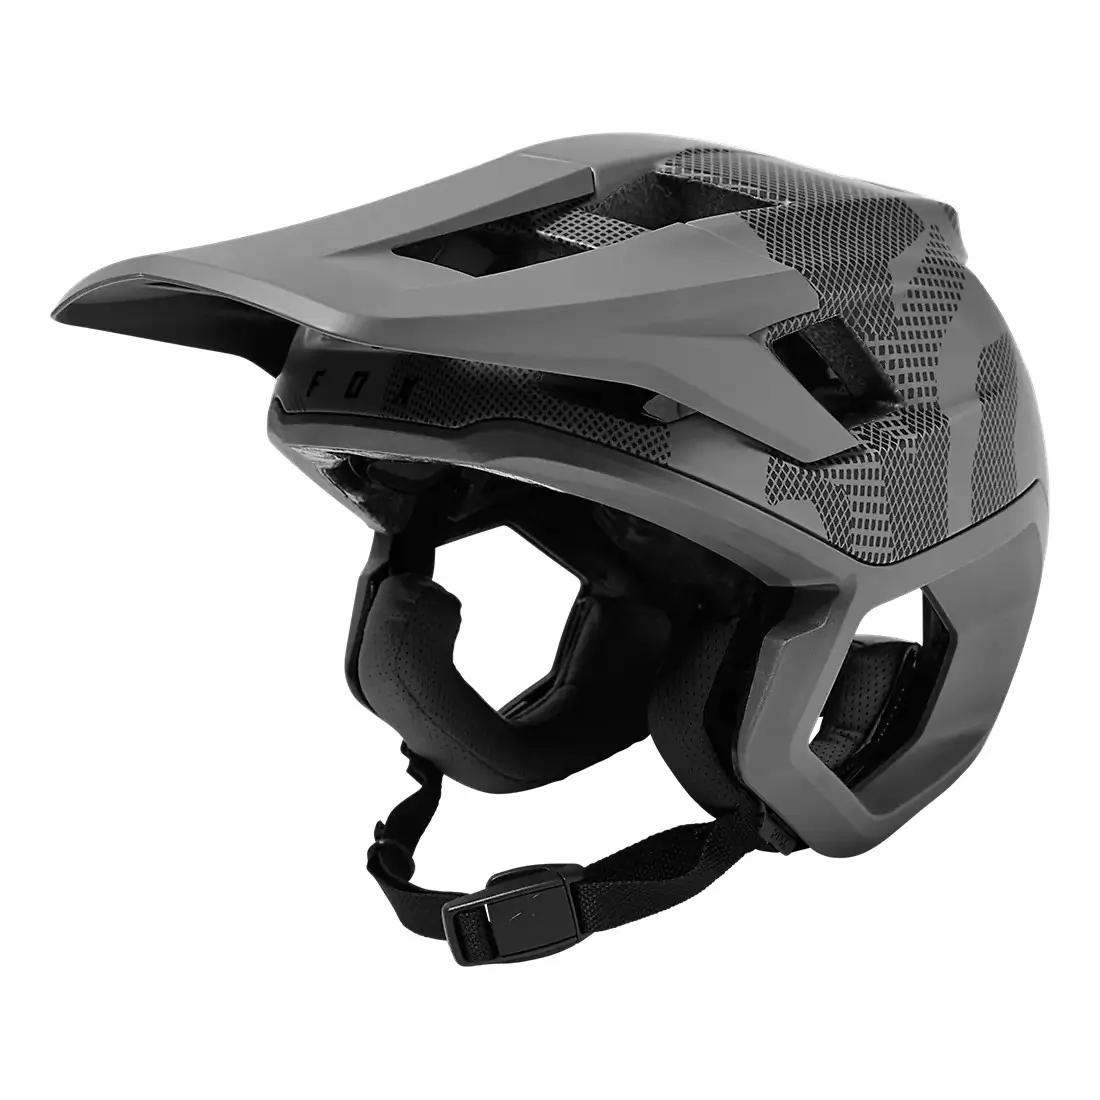 Dropframe Pro Camo Enduro Helmet Gray Camouflage Size XL (58-60cm) #2